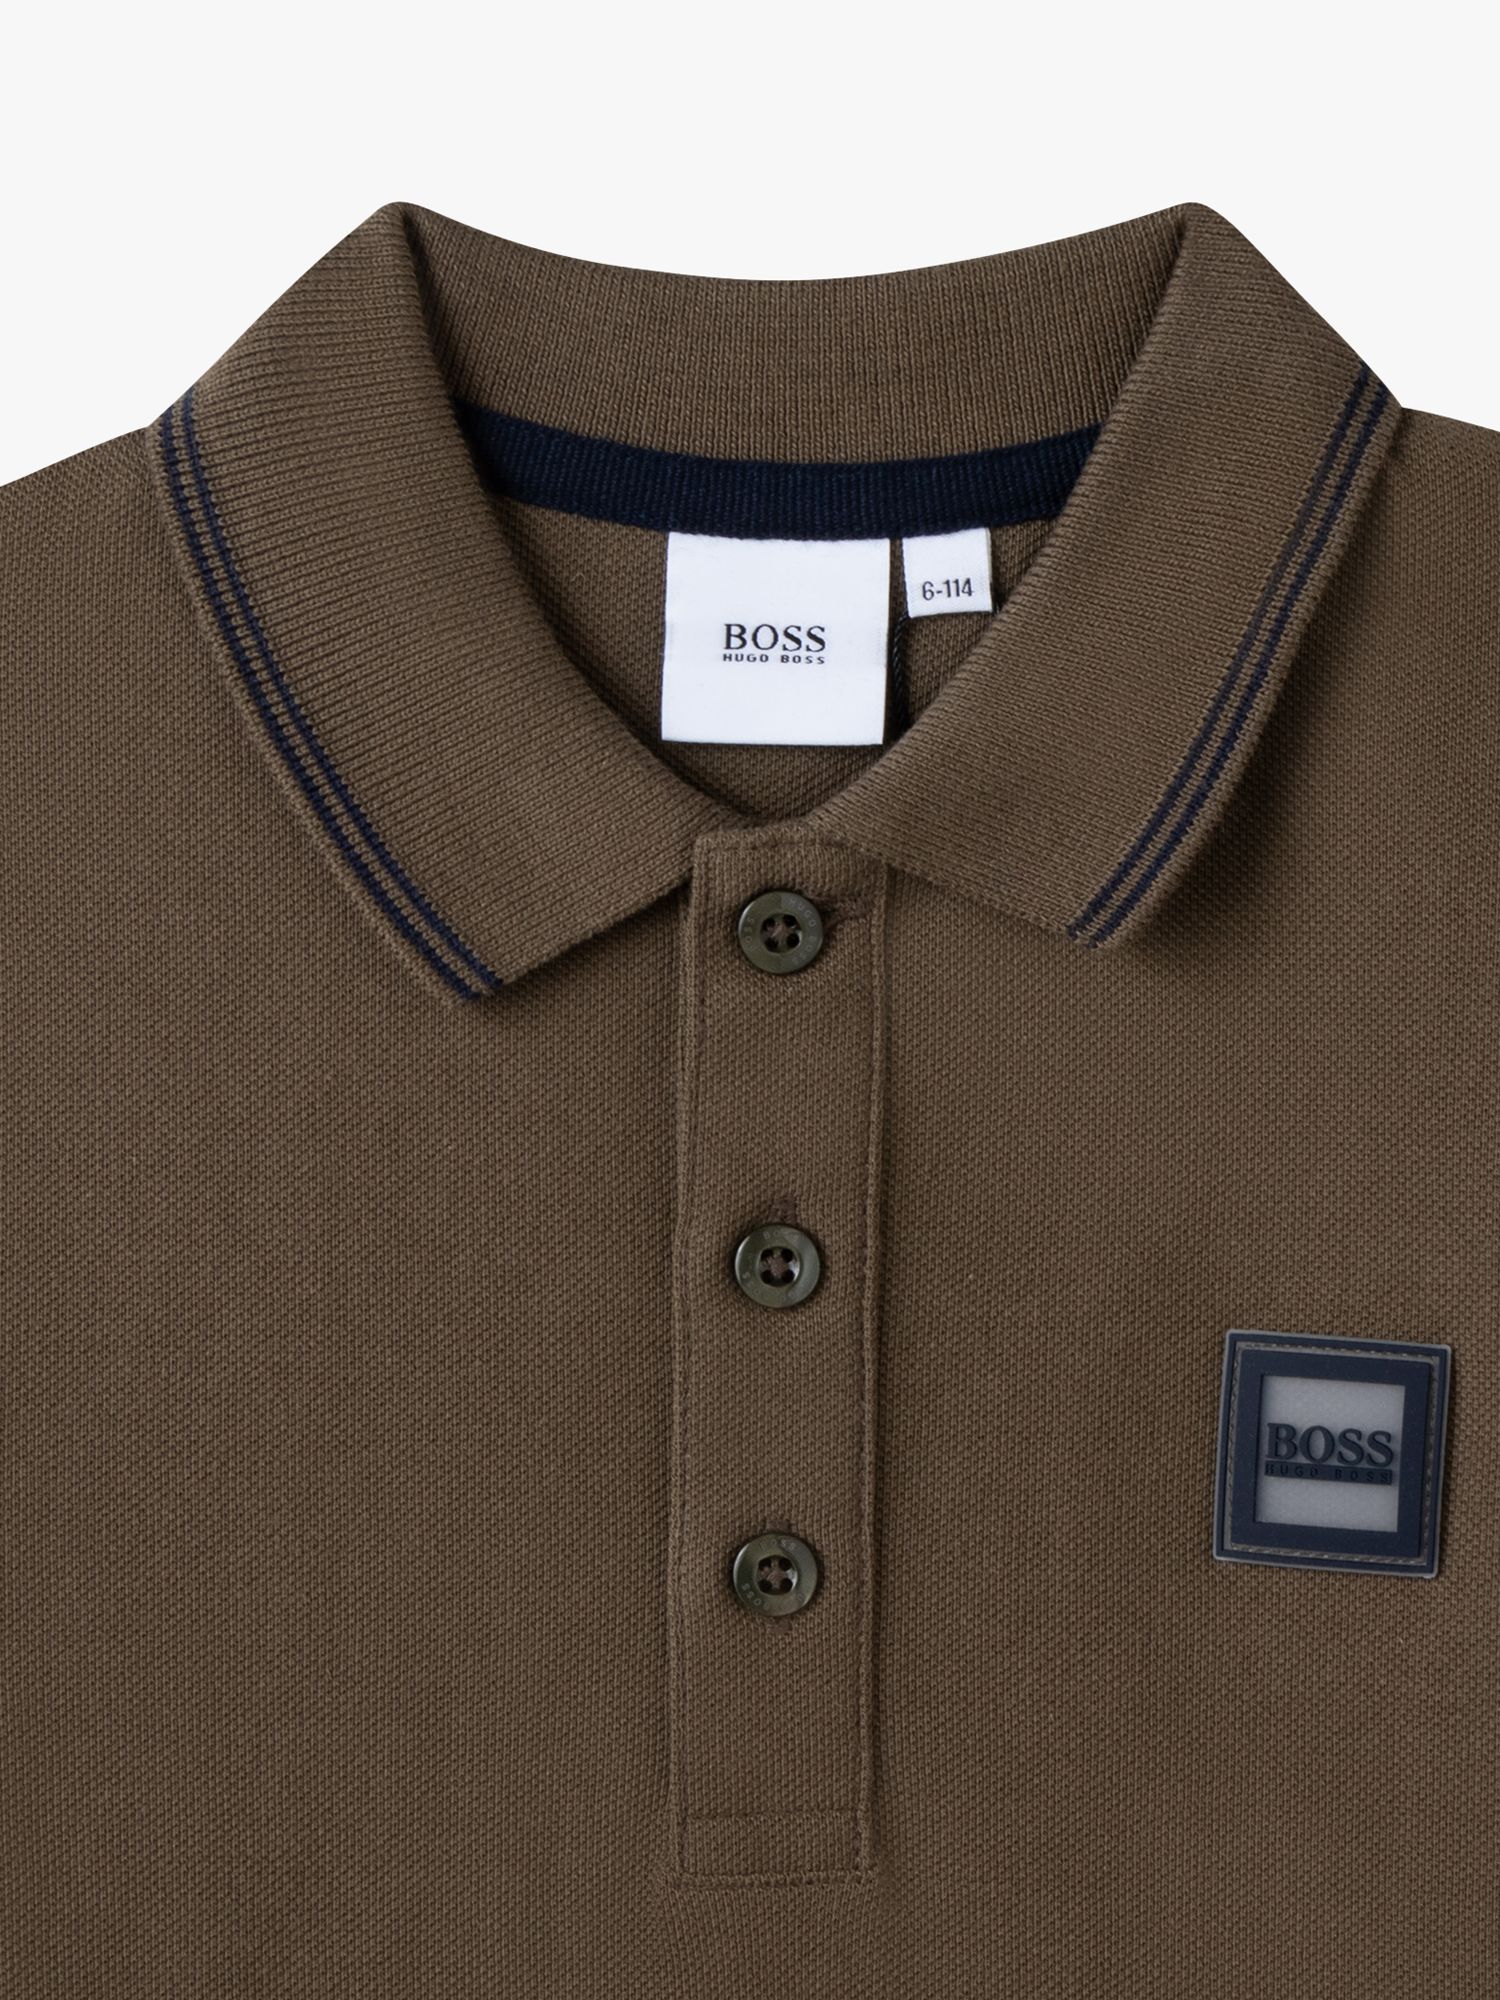 HUGO BOSS Kids' Long Sleeve Pique Cotton Polo Shirt, Khaki, 6 months